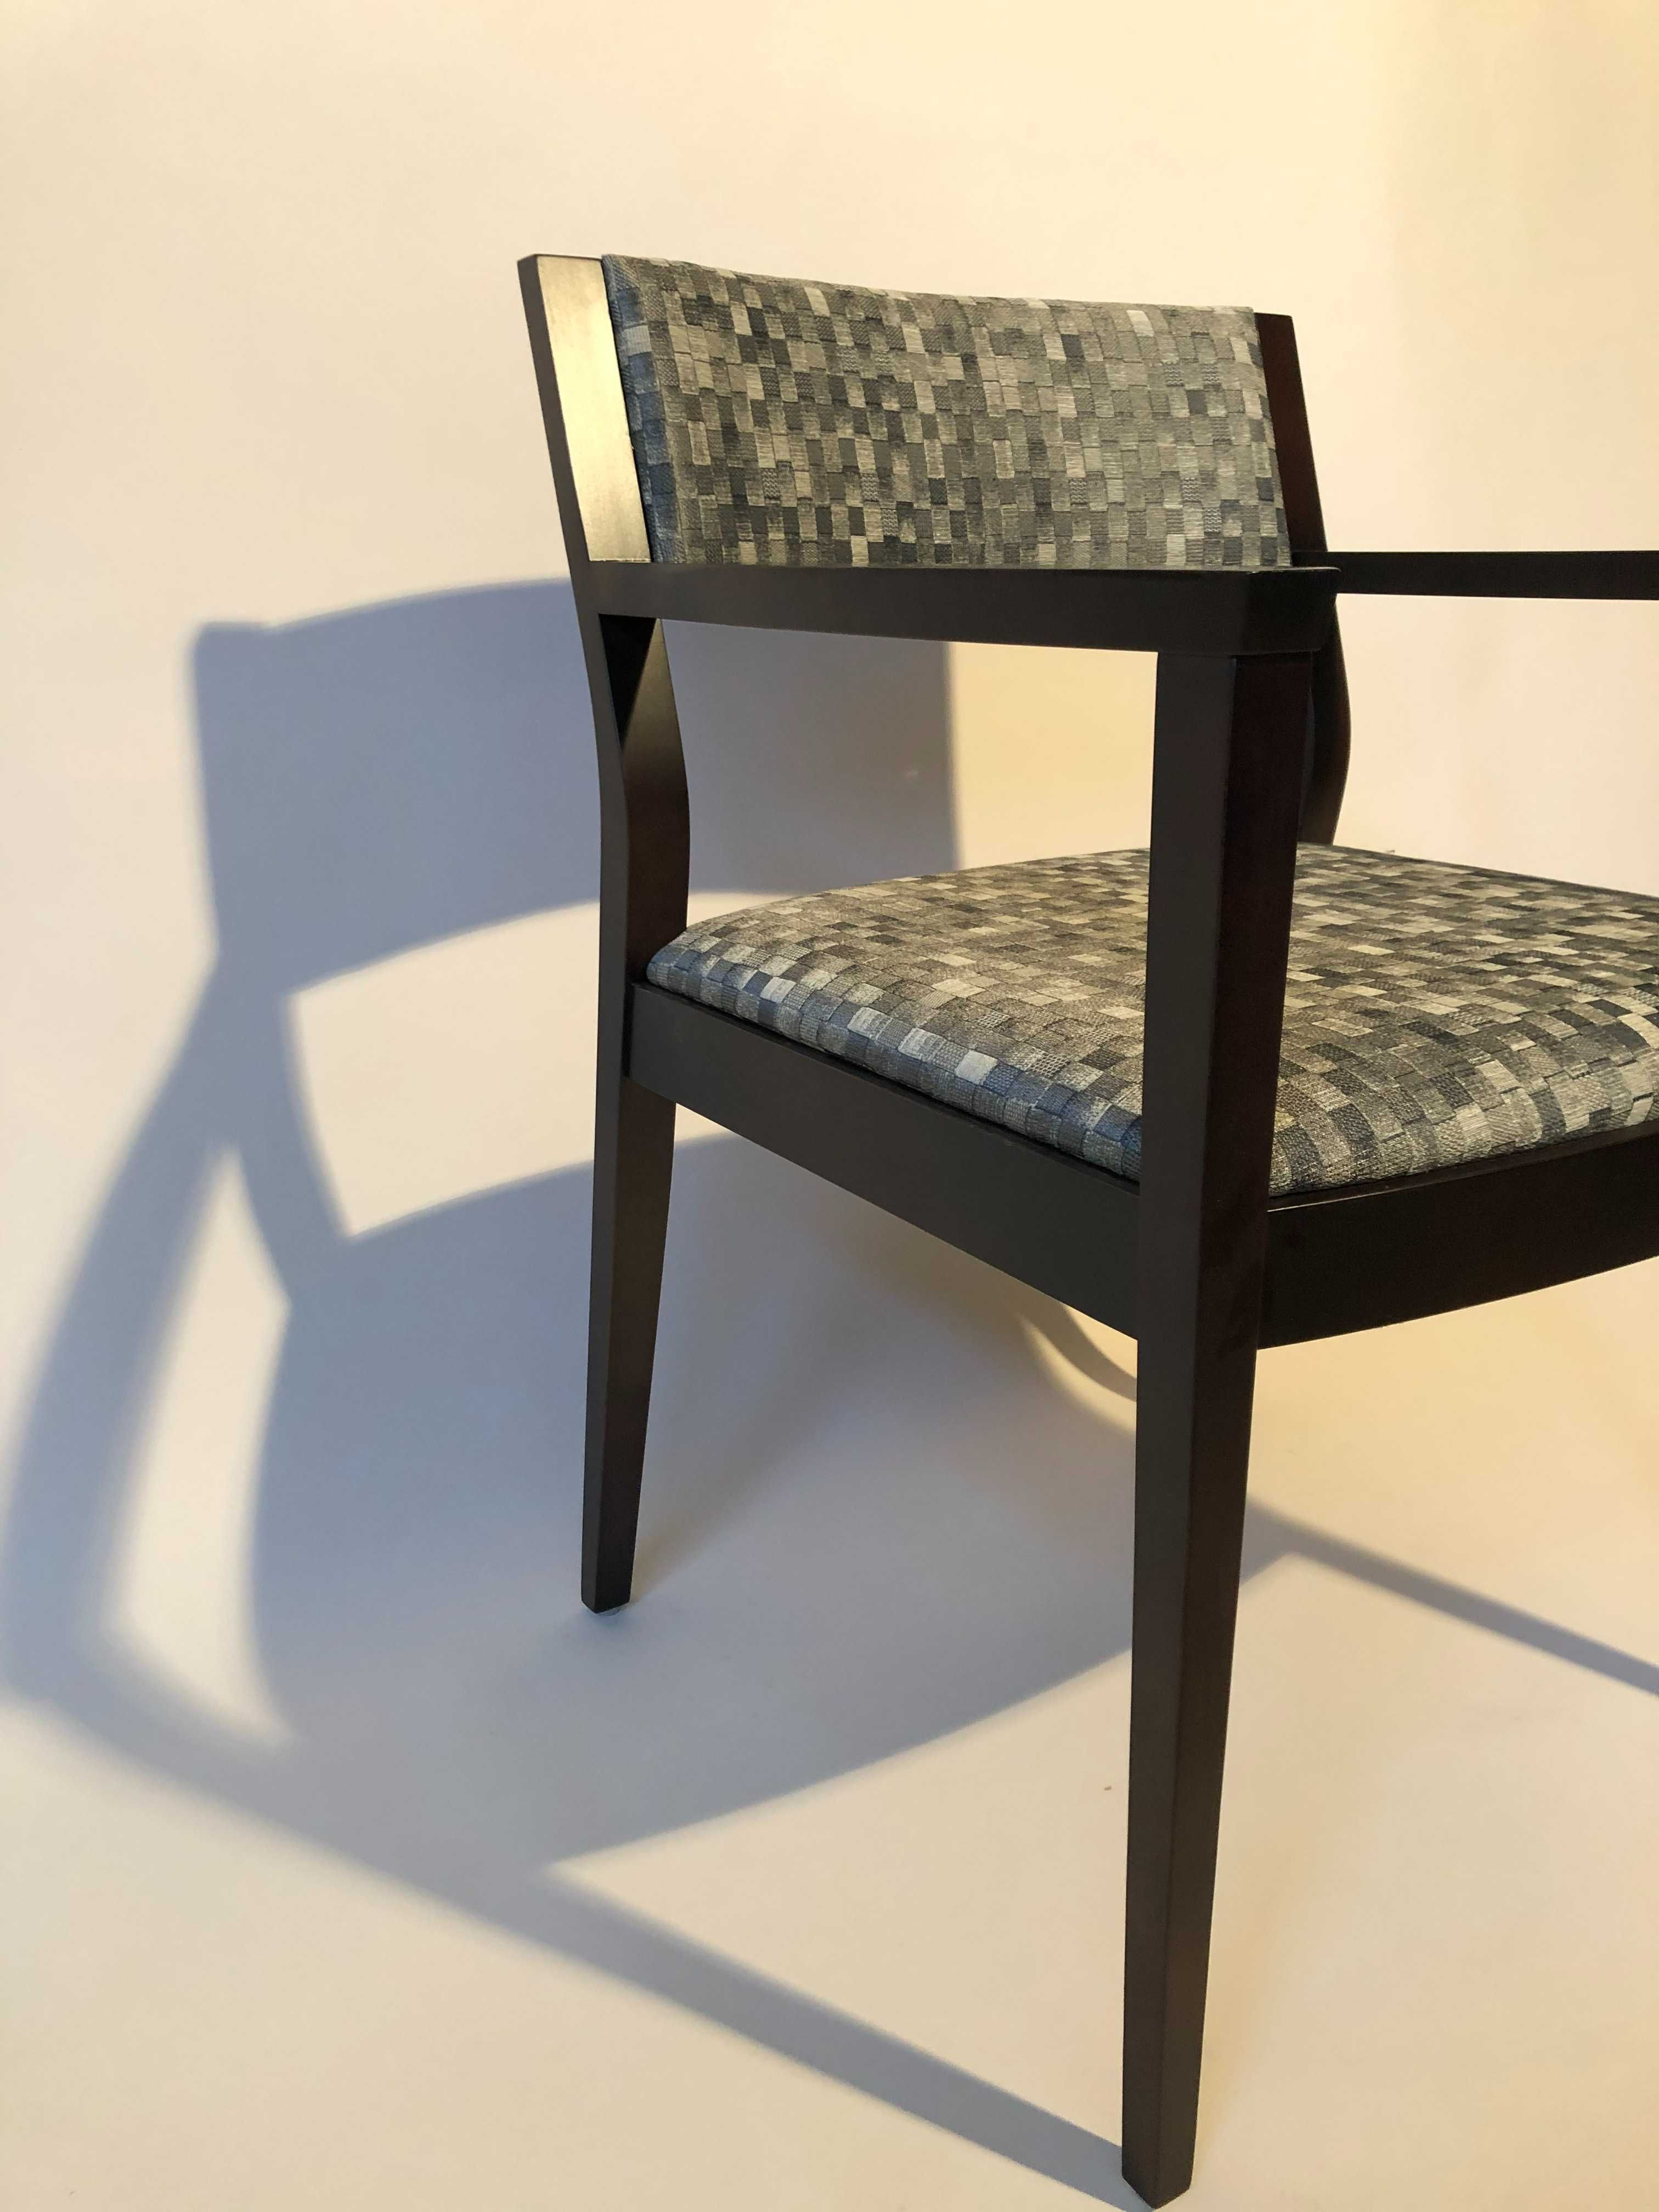 Krzeslo by Hickory Business Furniture (HBF) z North Carolina US